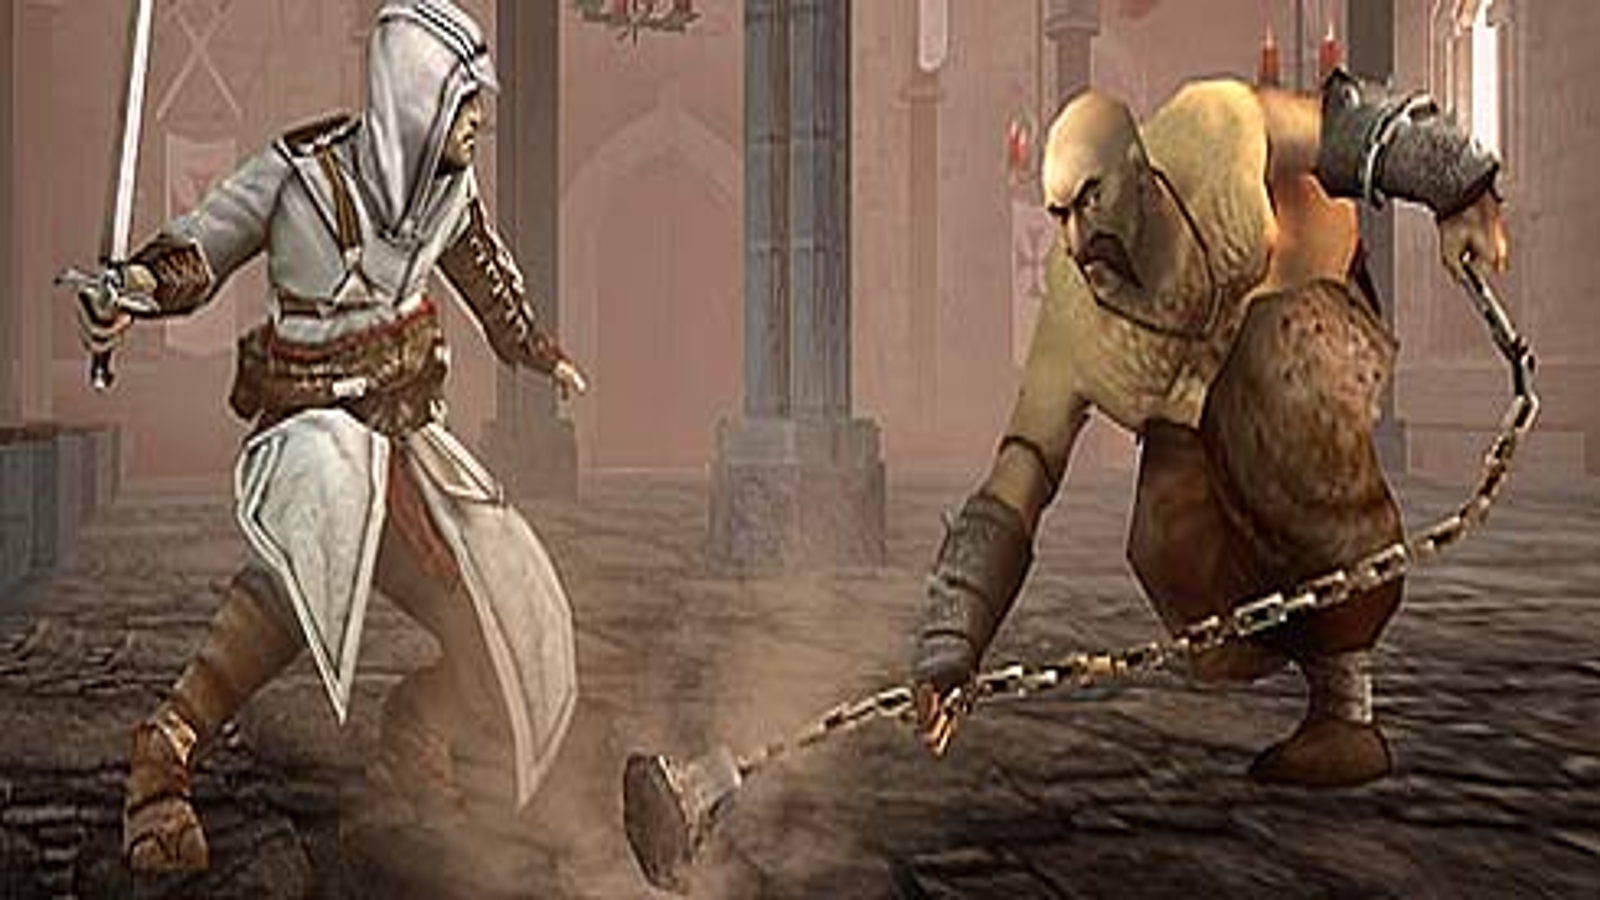 Assassin's Creed Bloodlines - Gameplay Walkthrough Part 6 (PSP